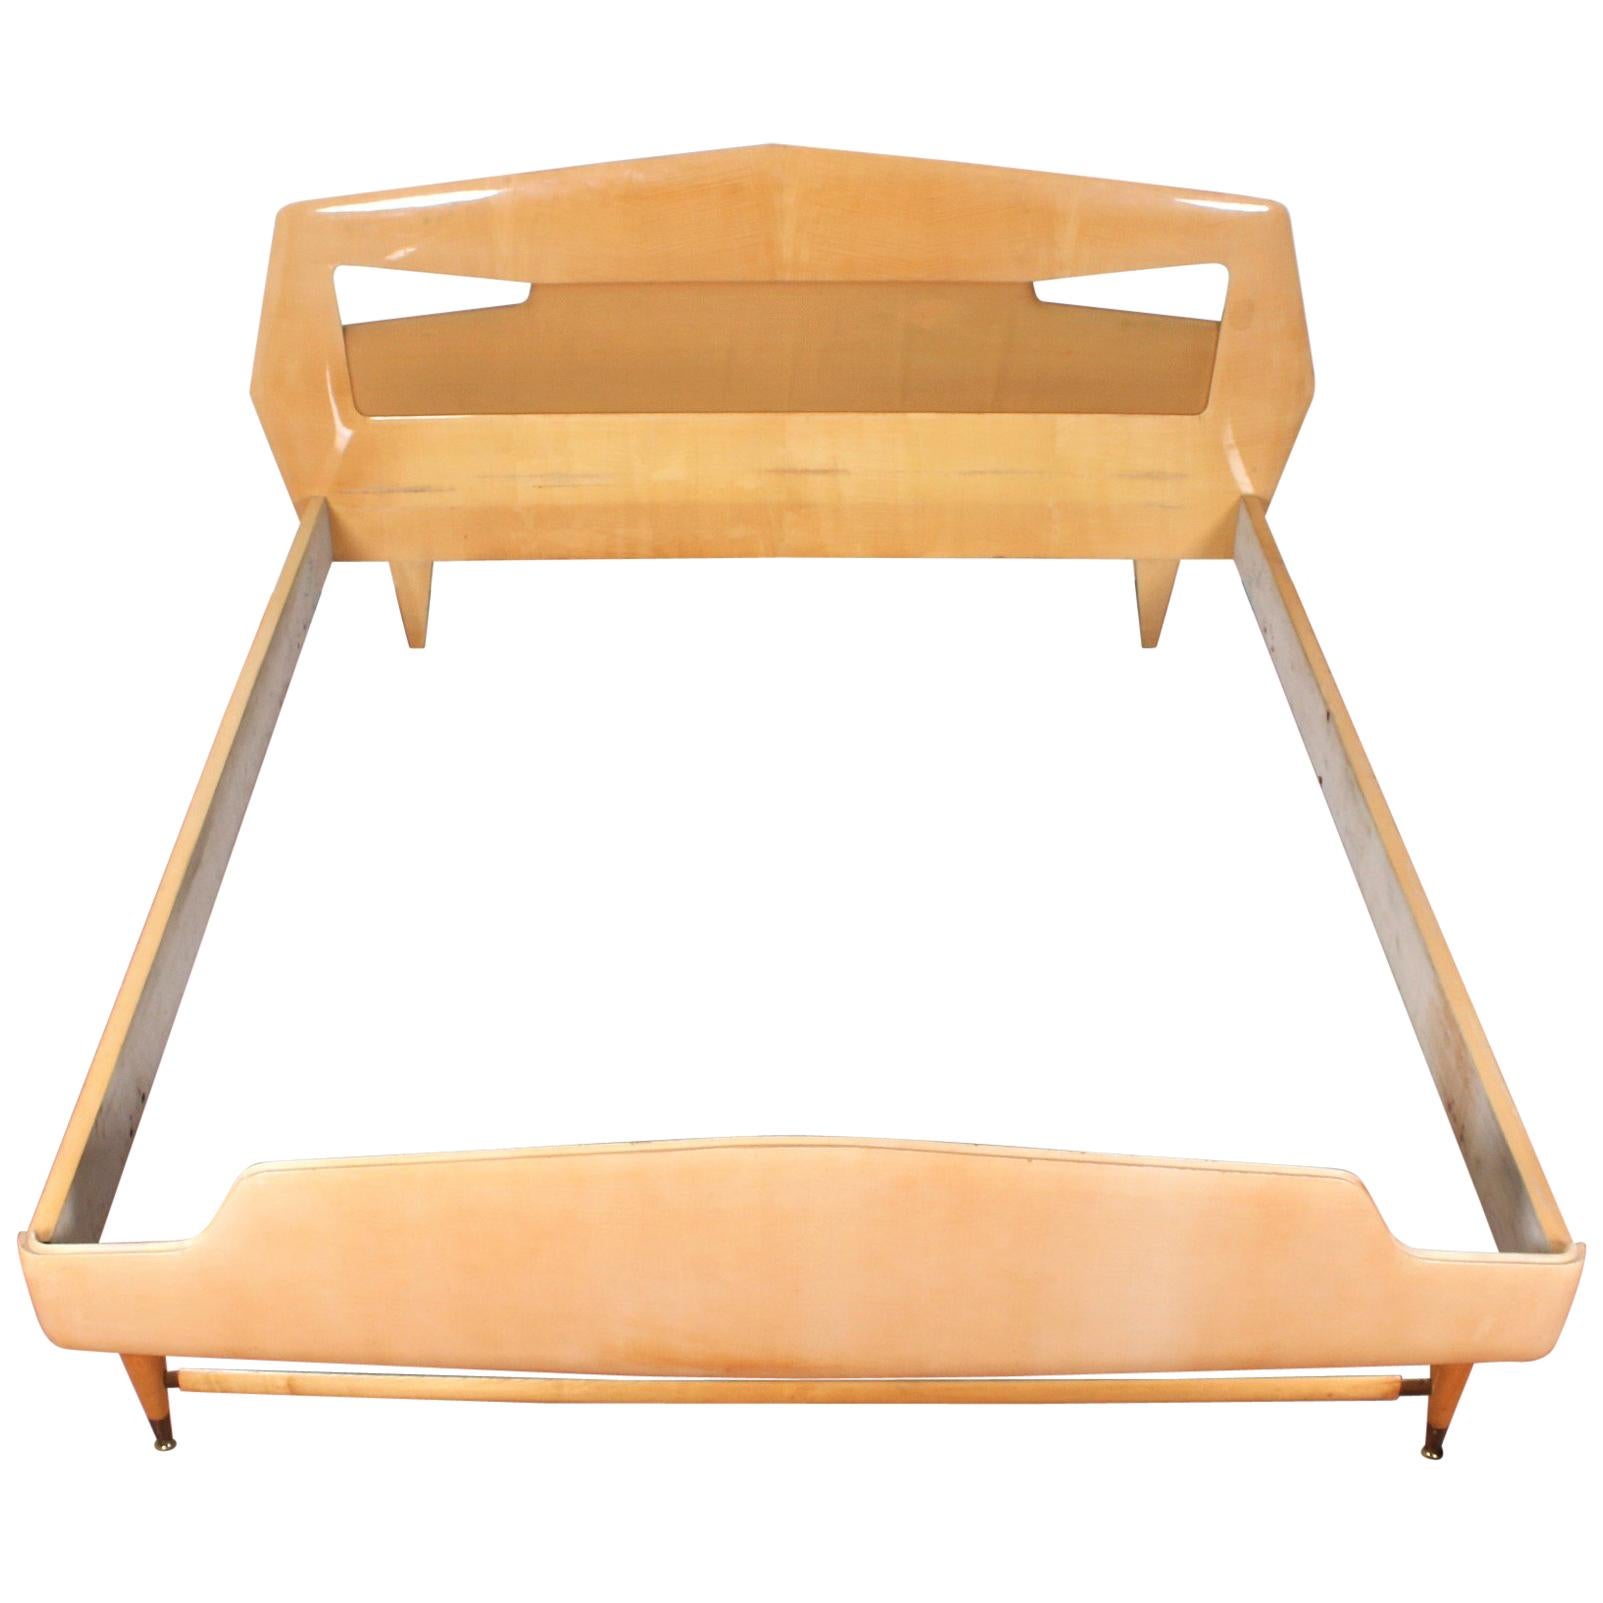  Midcentury  maple wood Double Bed Silvio Cavatorta for Dassi  Italy 60s